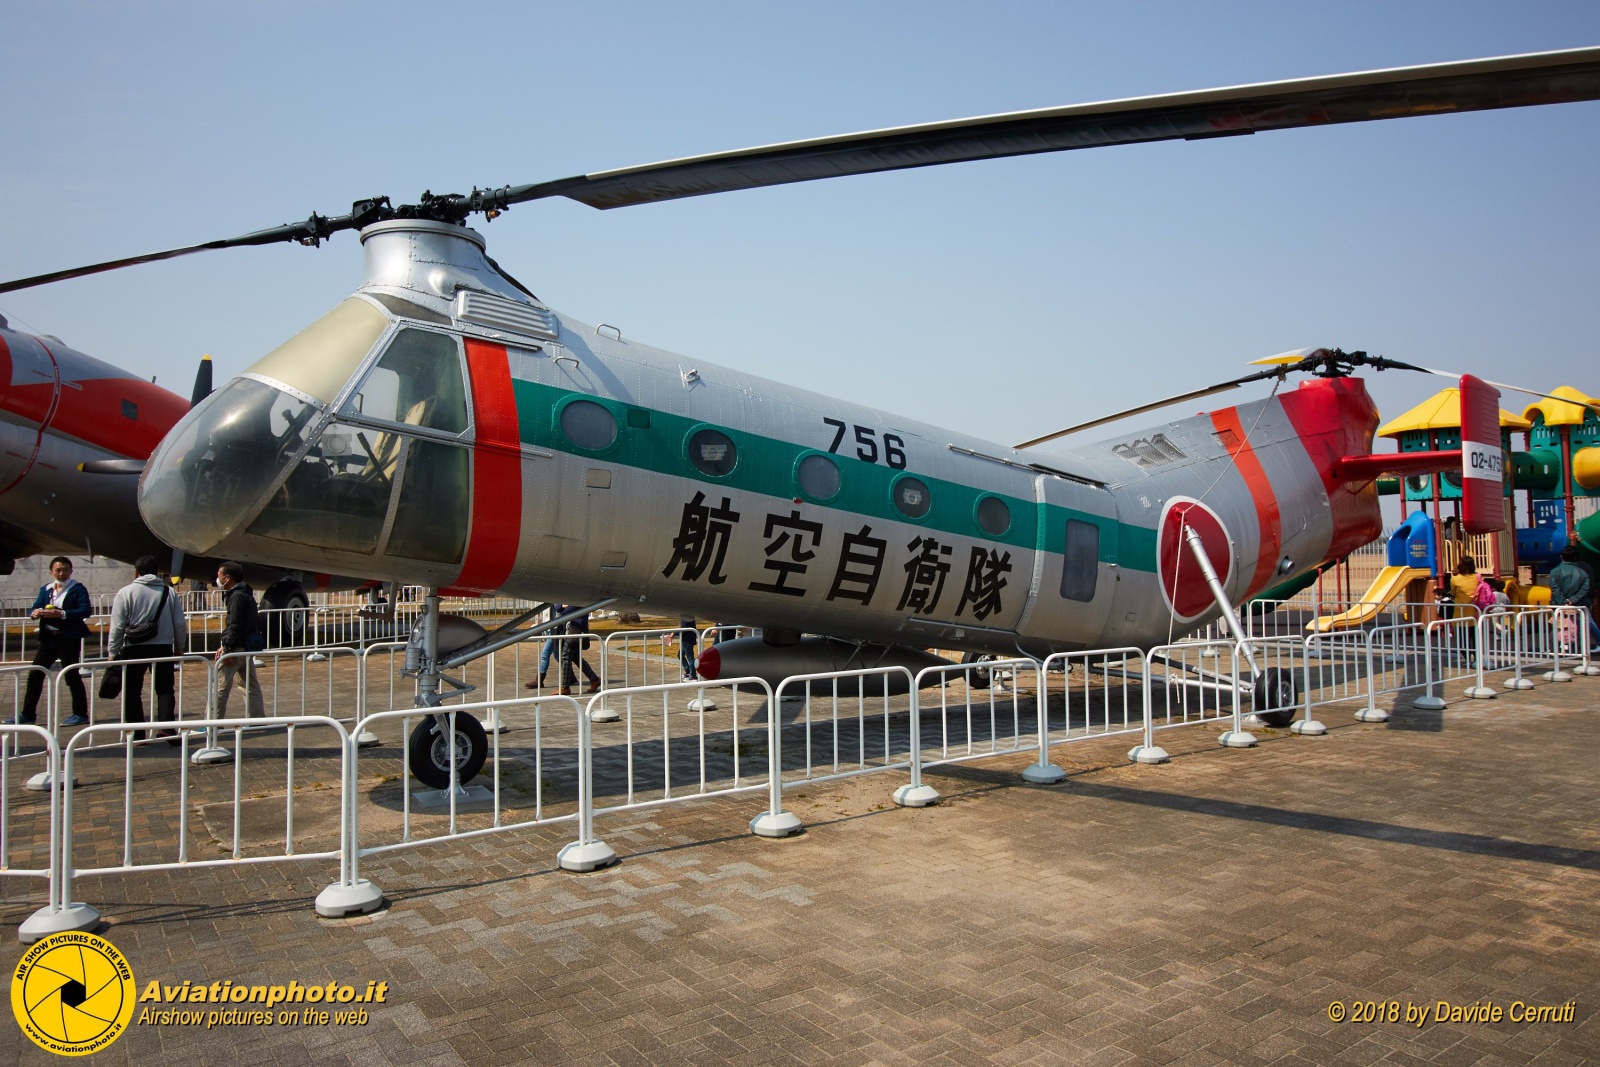 JSDAF Japan Self Defence Air Force Museum - Hamamatsu